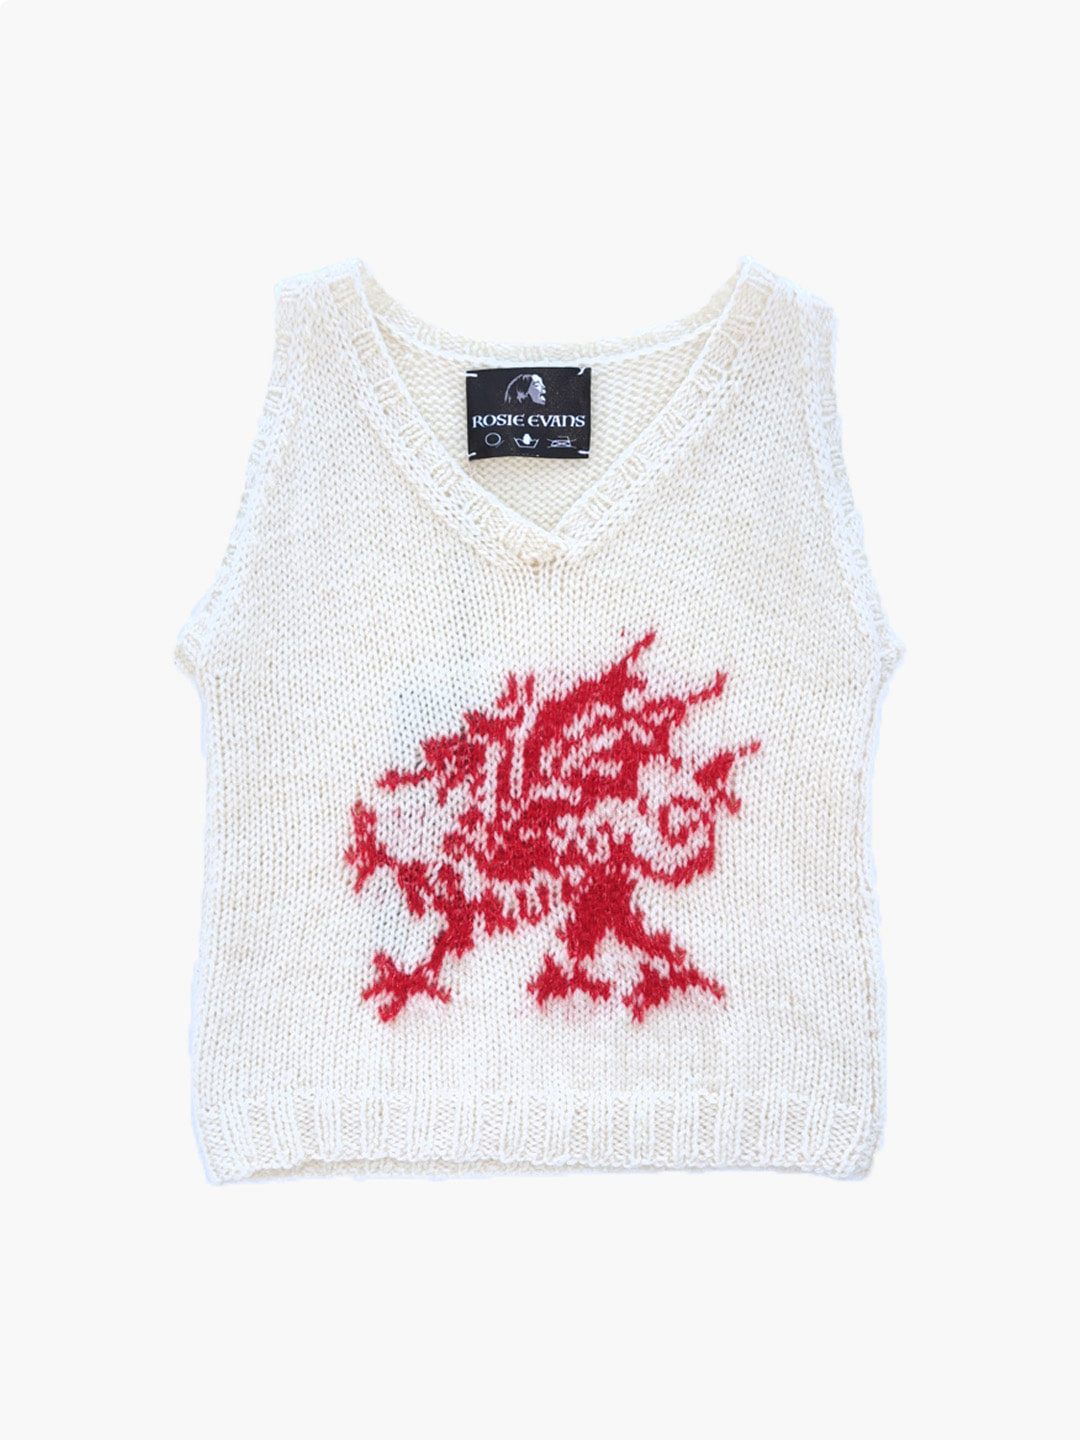 ROSIE EVANSHer dragon knit vest